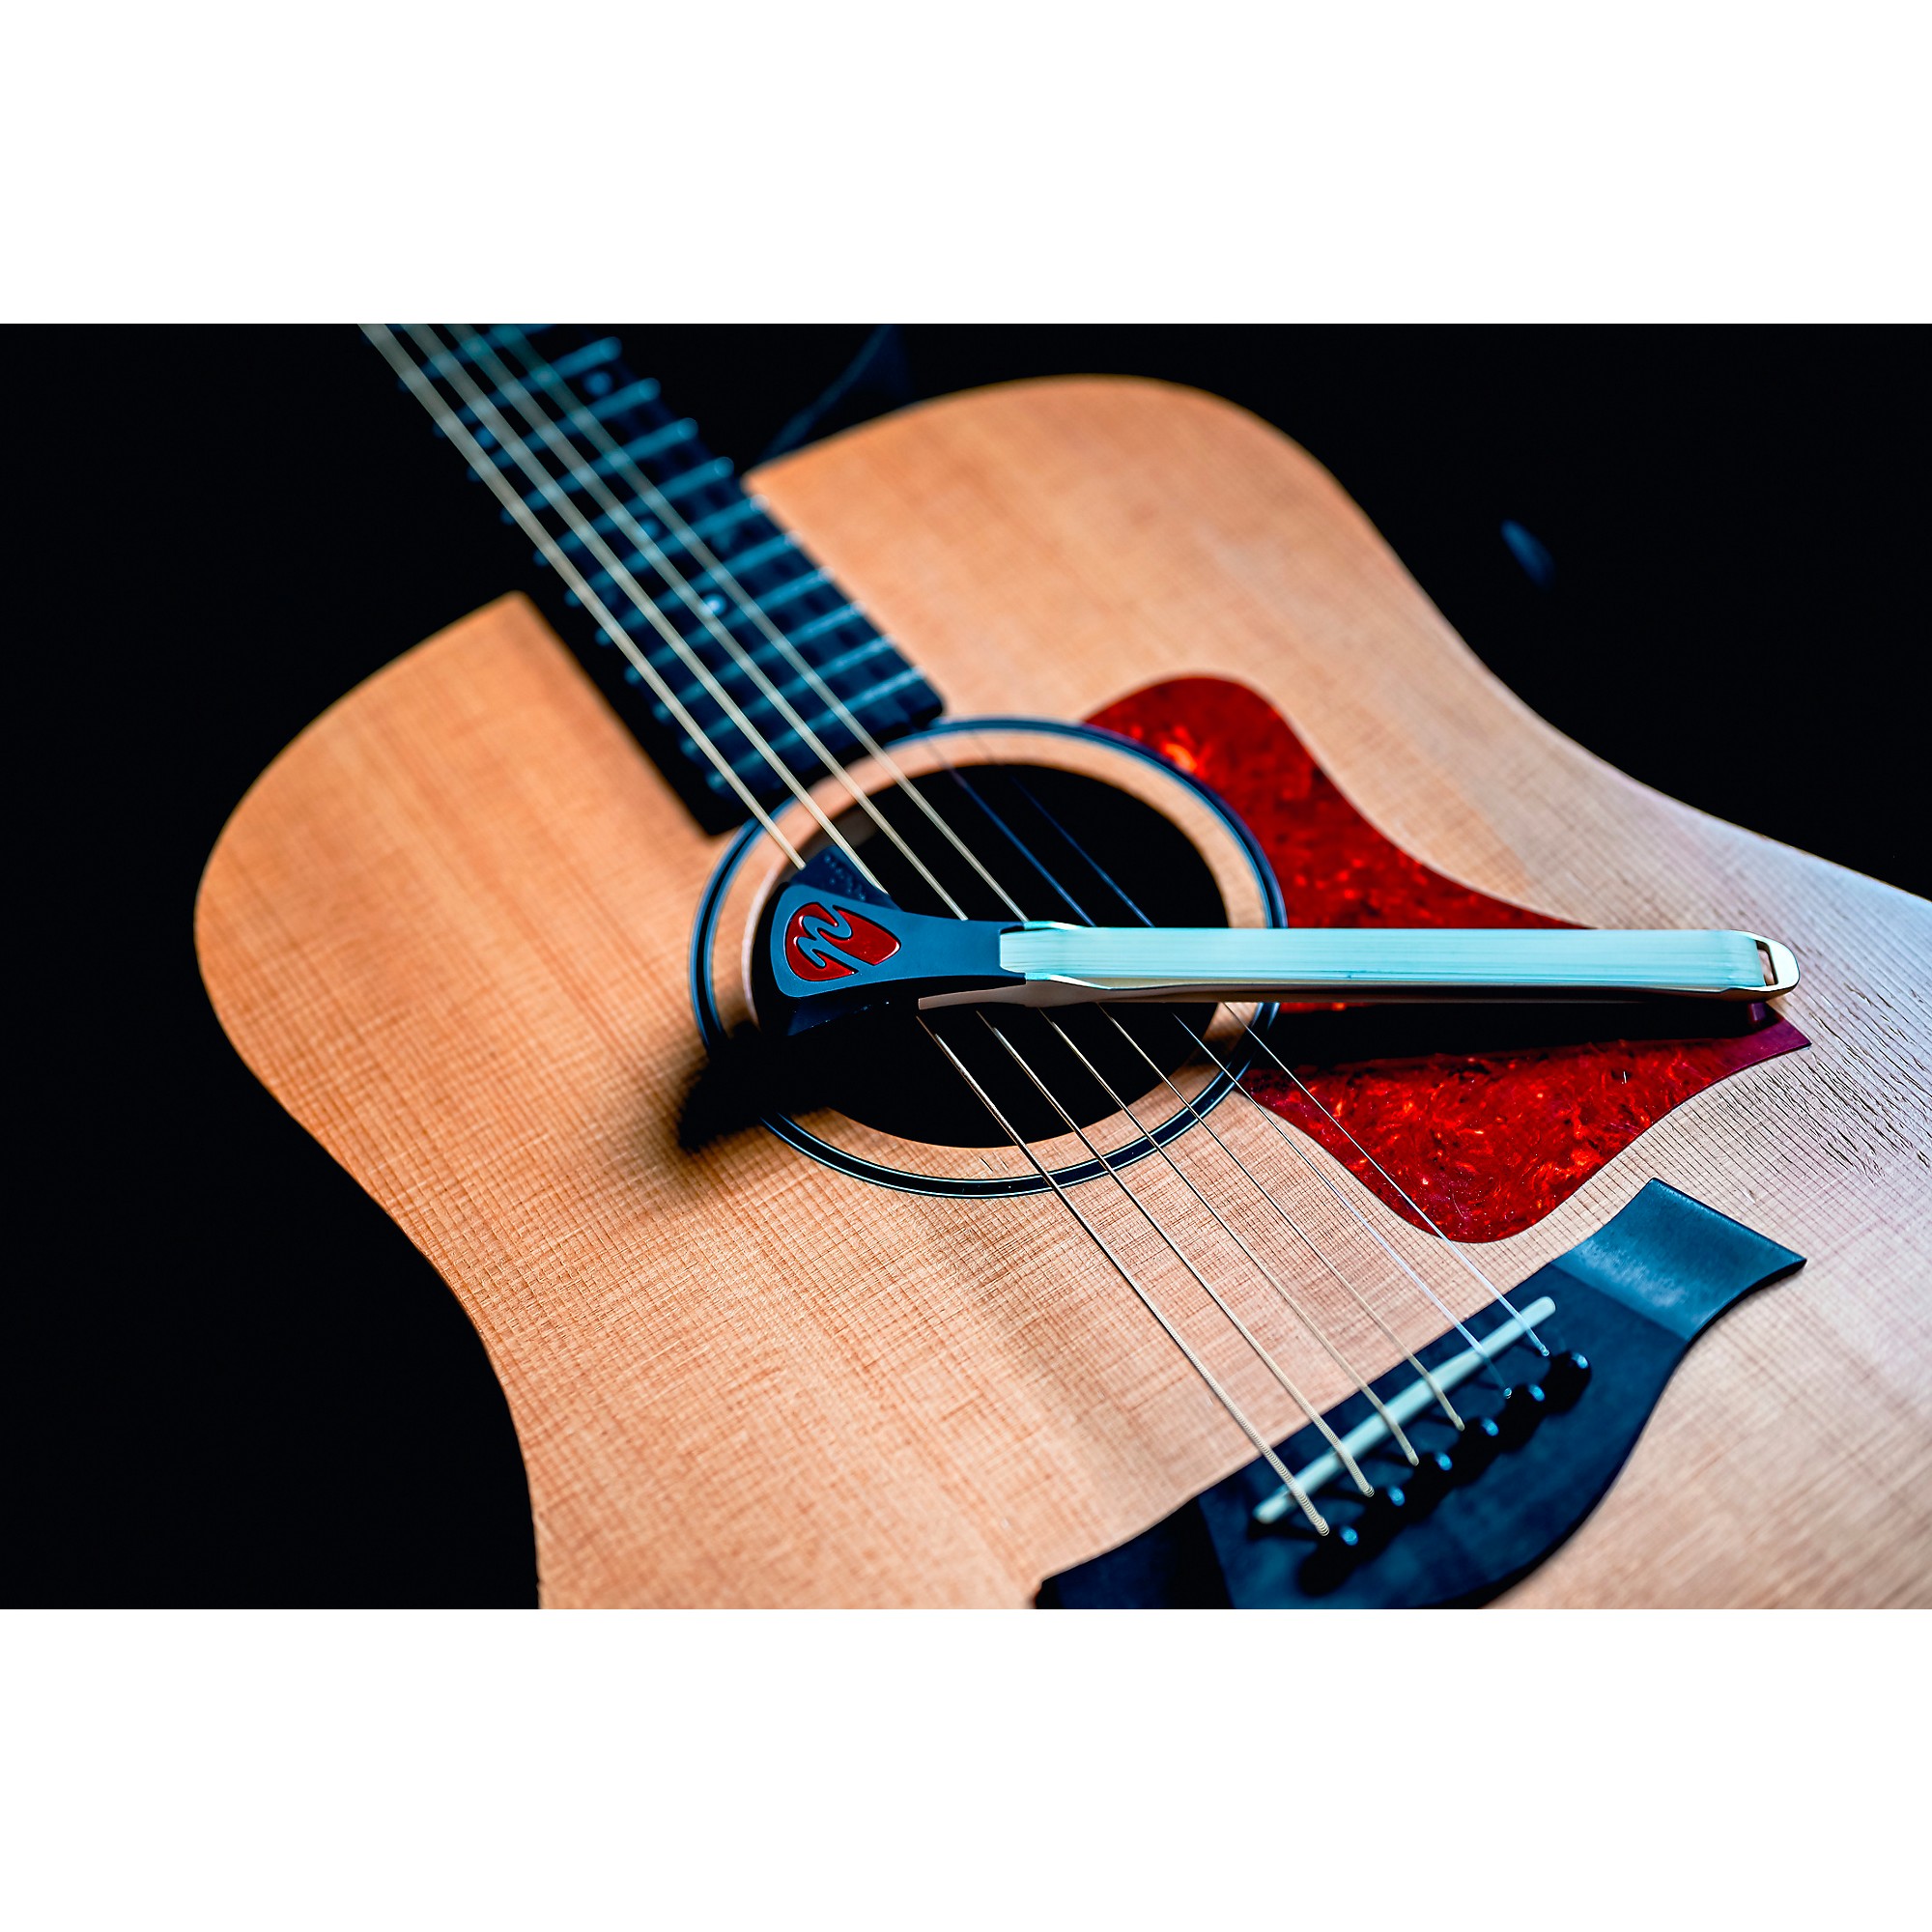 Picasso Guitar Bow, Archet de guitare Picasso Bow médiator de guitare,  archet de guitare double face avec médiator intégré, accessoires de guitare